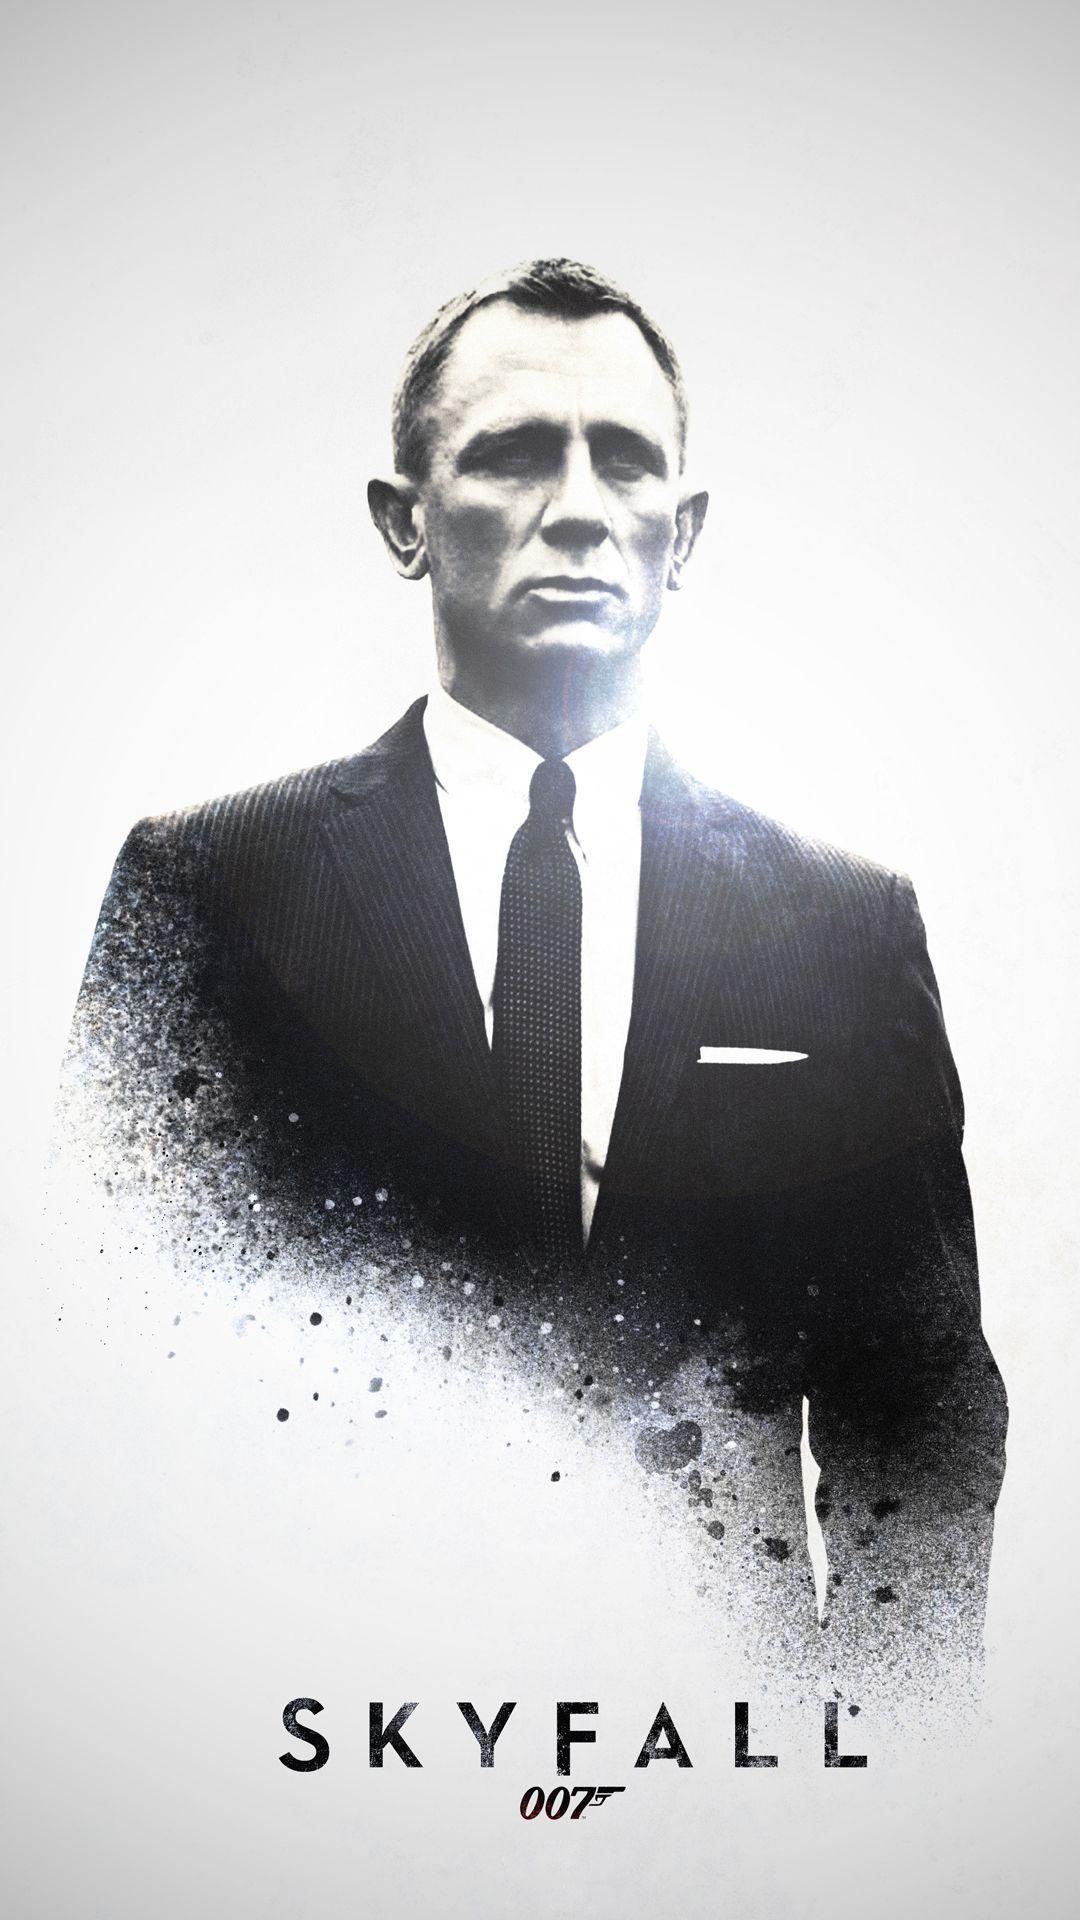 James Bond Skyfall 007 htc one wallpaper. Download